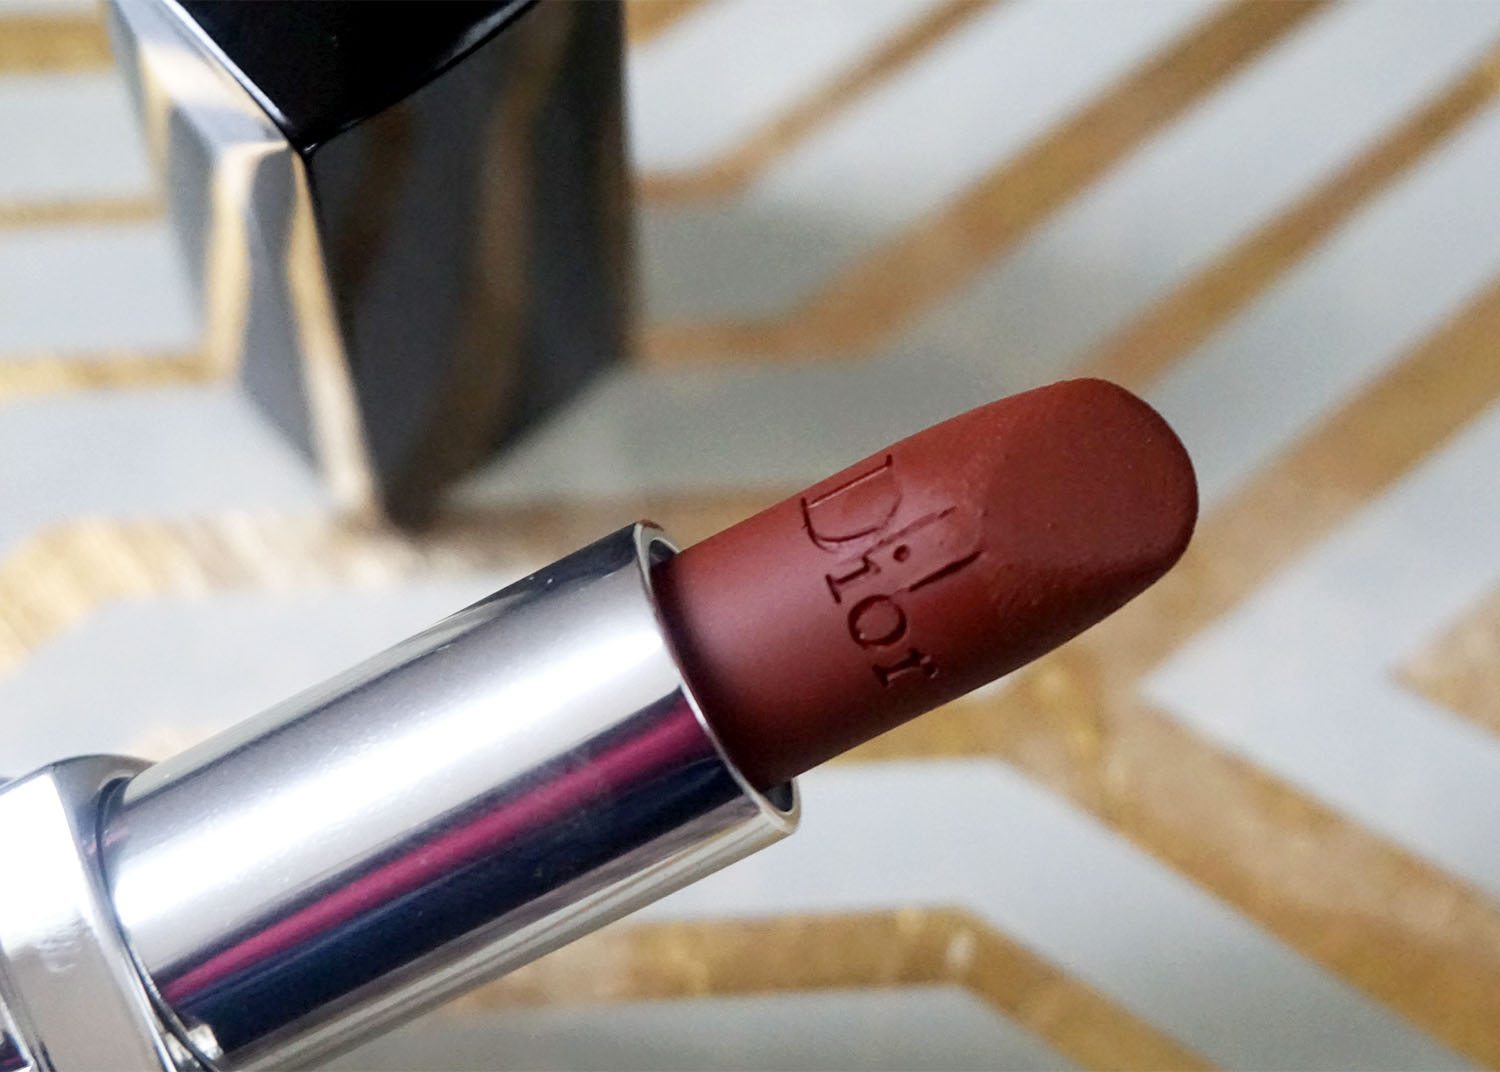 dior brown lipstick